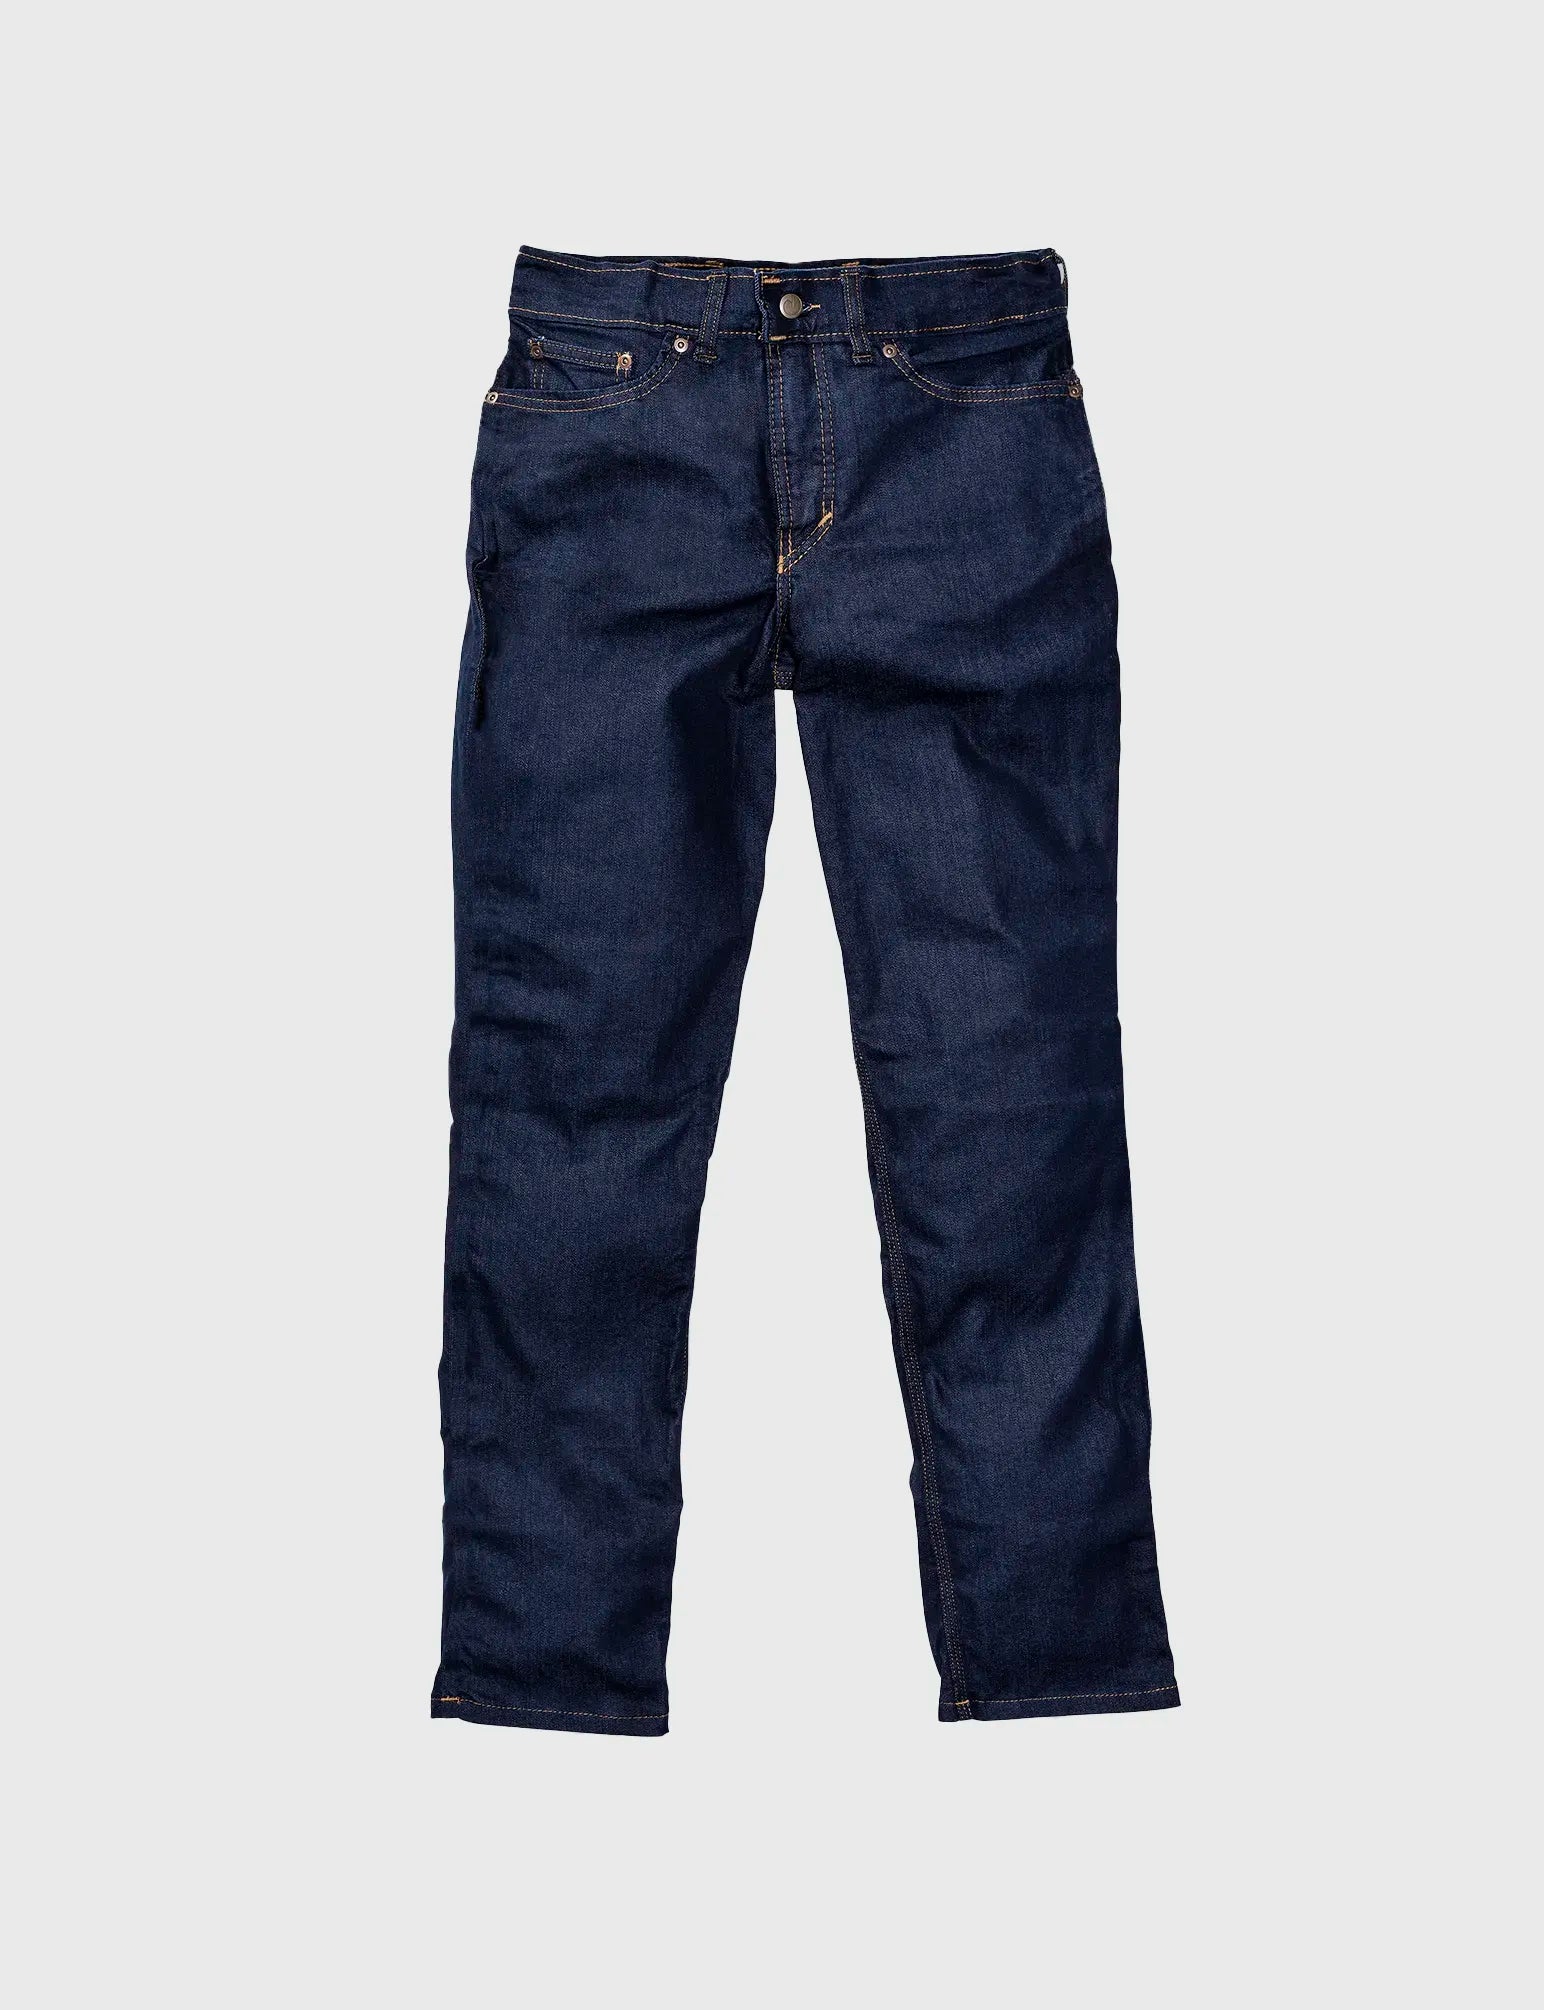 Dark Blue Clean Look Denim Jeans For Men (gbdnm6002), Gents Denim Pants,  मेन डेनिम जीन्स - Olive Attires Private Limited, Kannur | ID: 24819827897